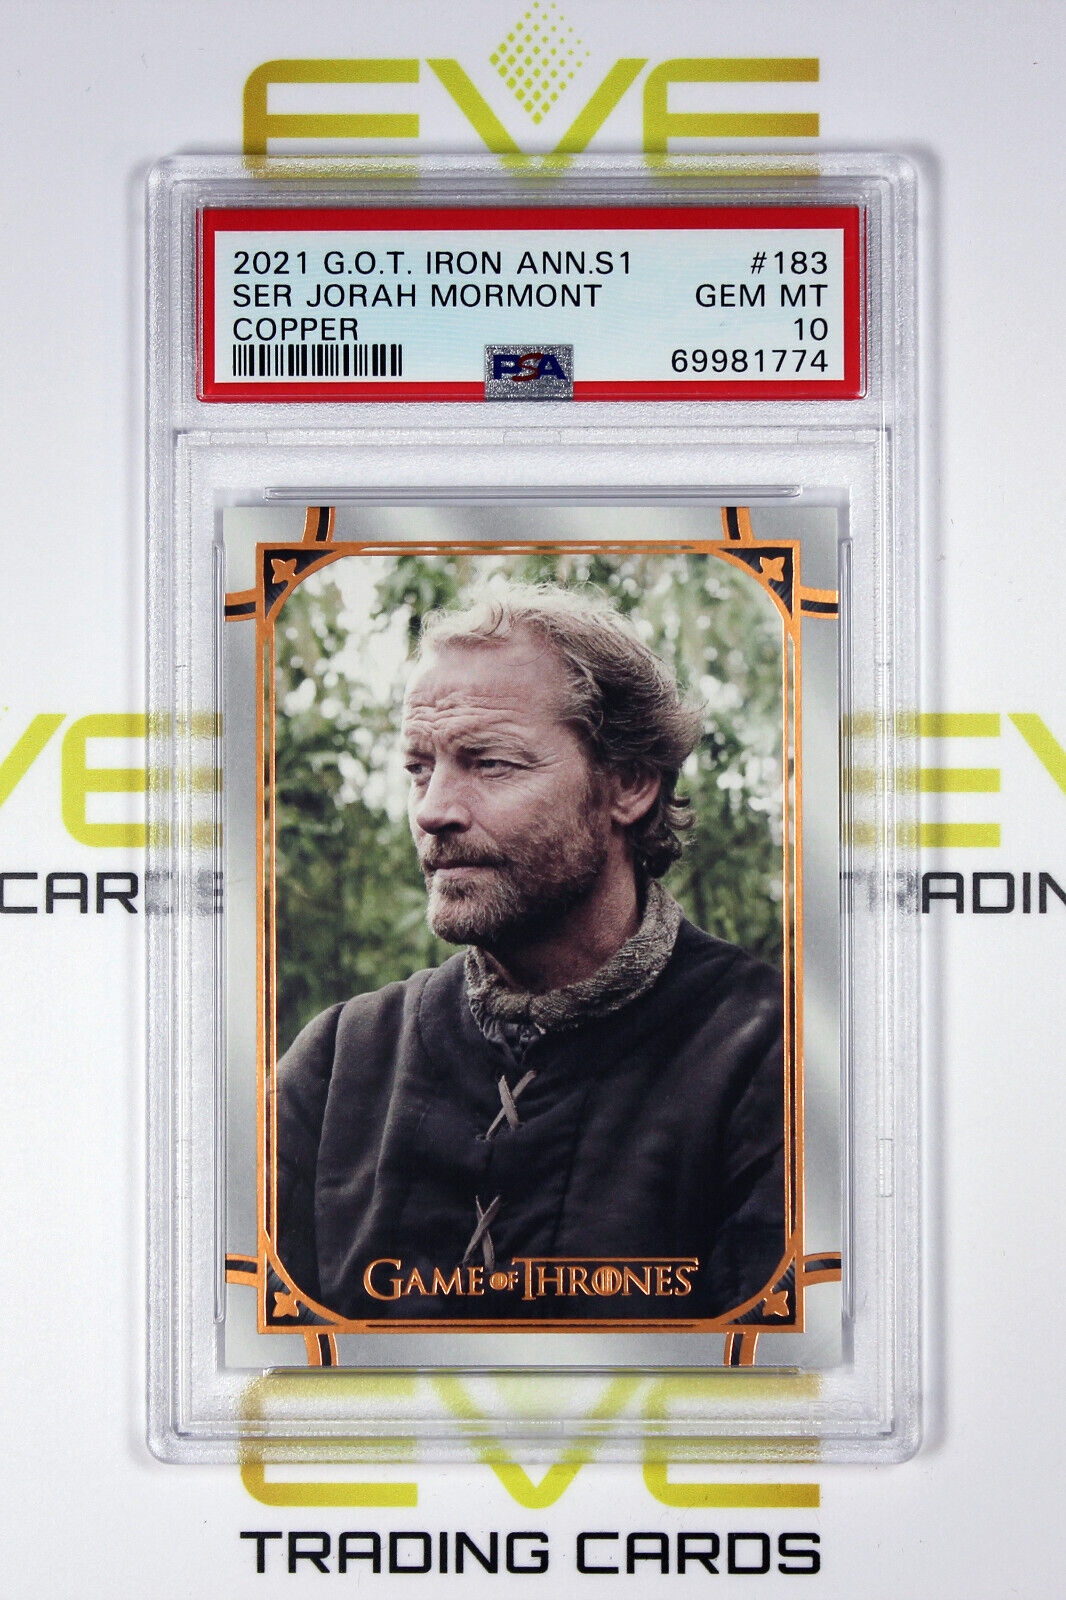 Graded Game of Thrones Card - #183 2021 Ser Jorah Mormont - Copper /199 - PSA 10